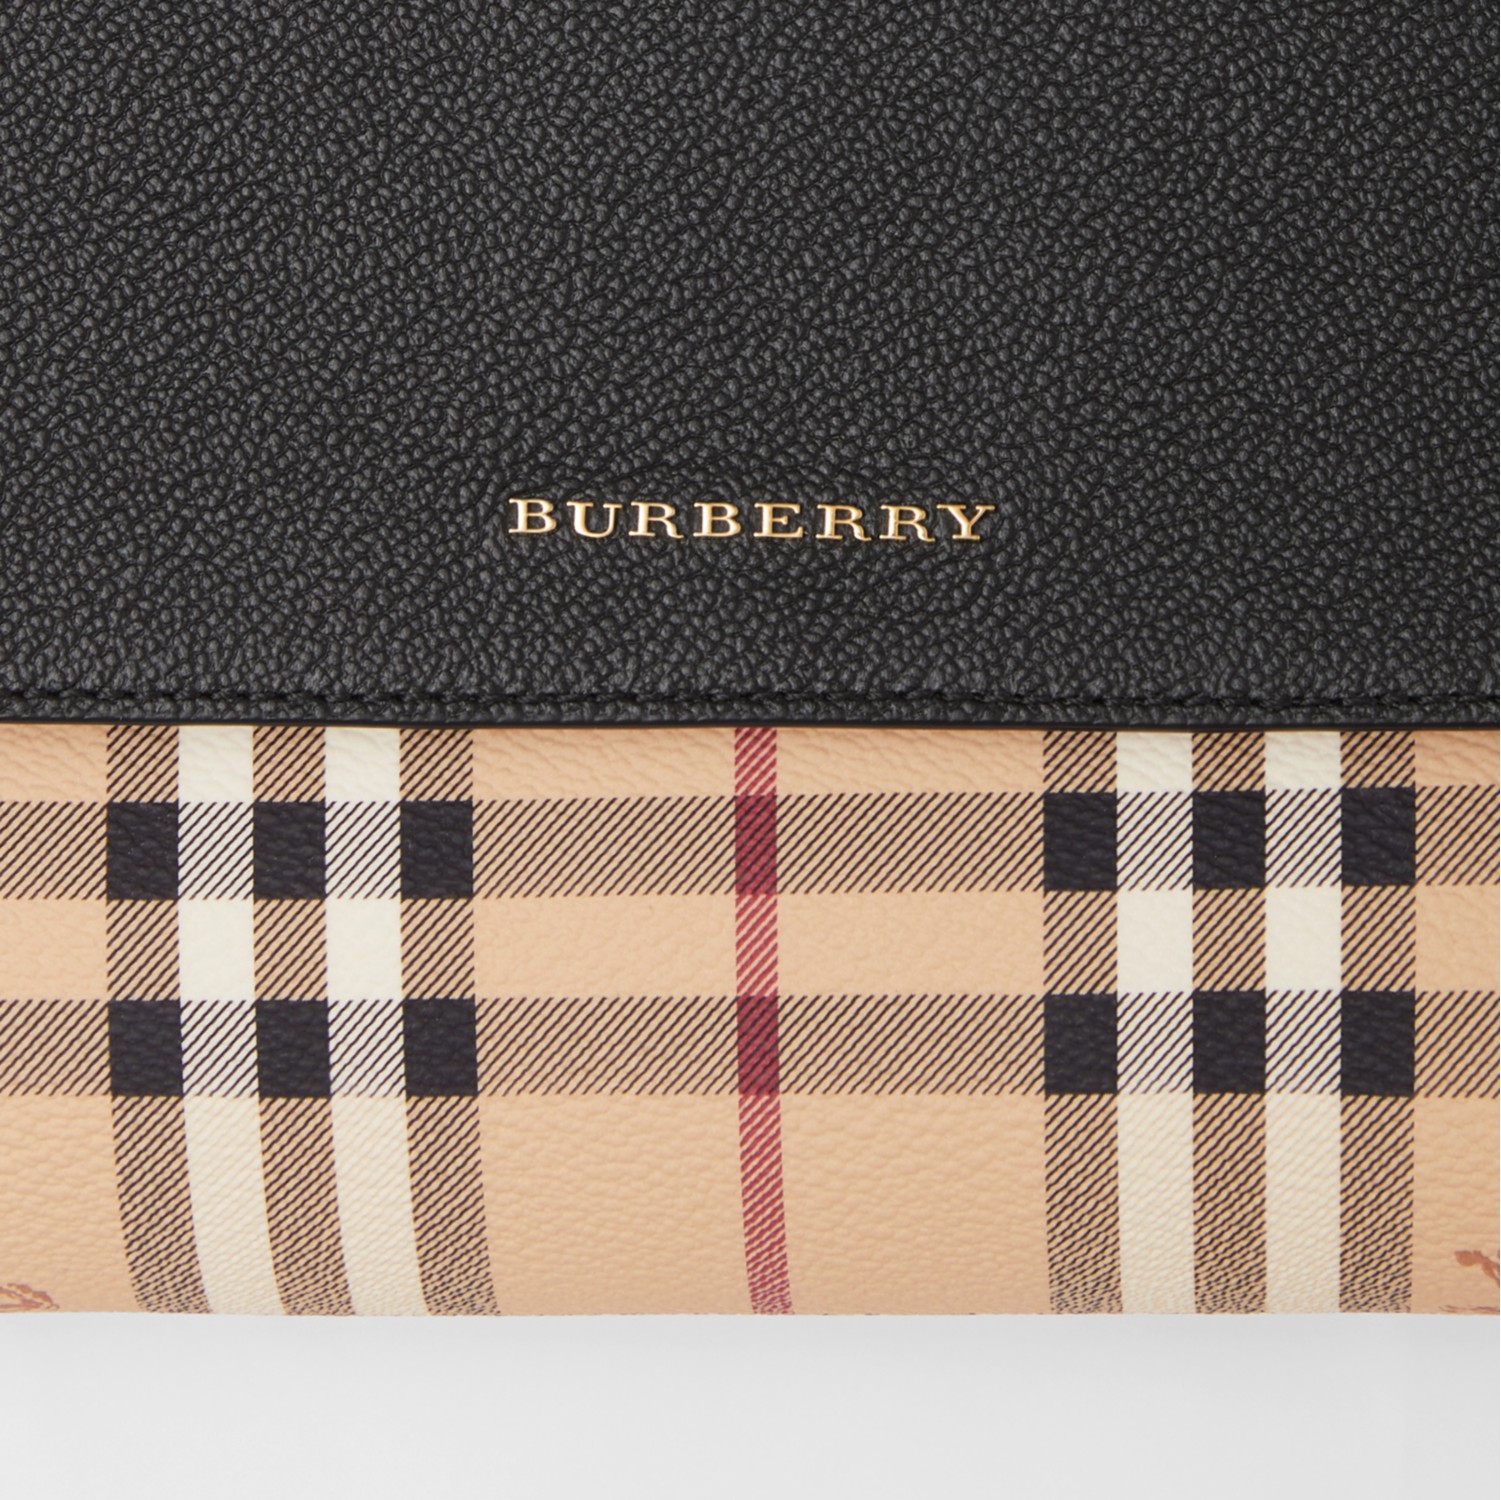 O xadrez Burberry  Burberry® oficial